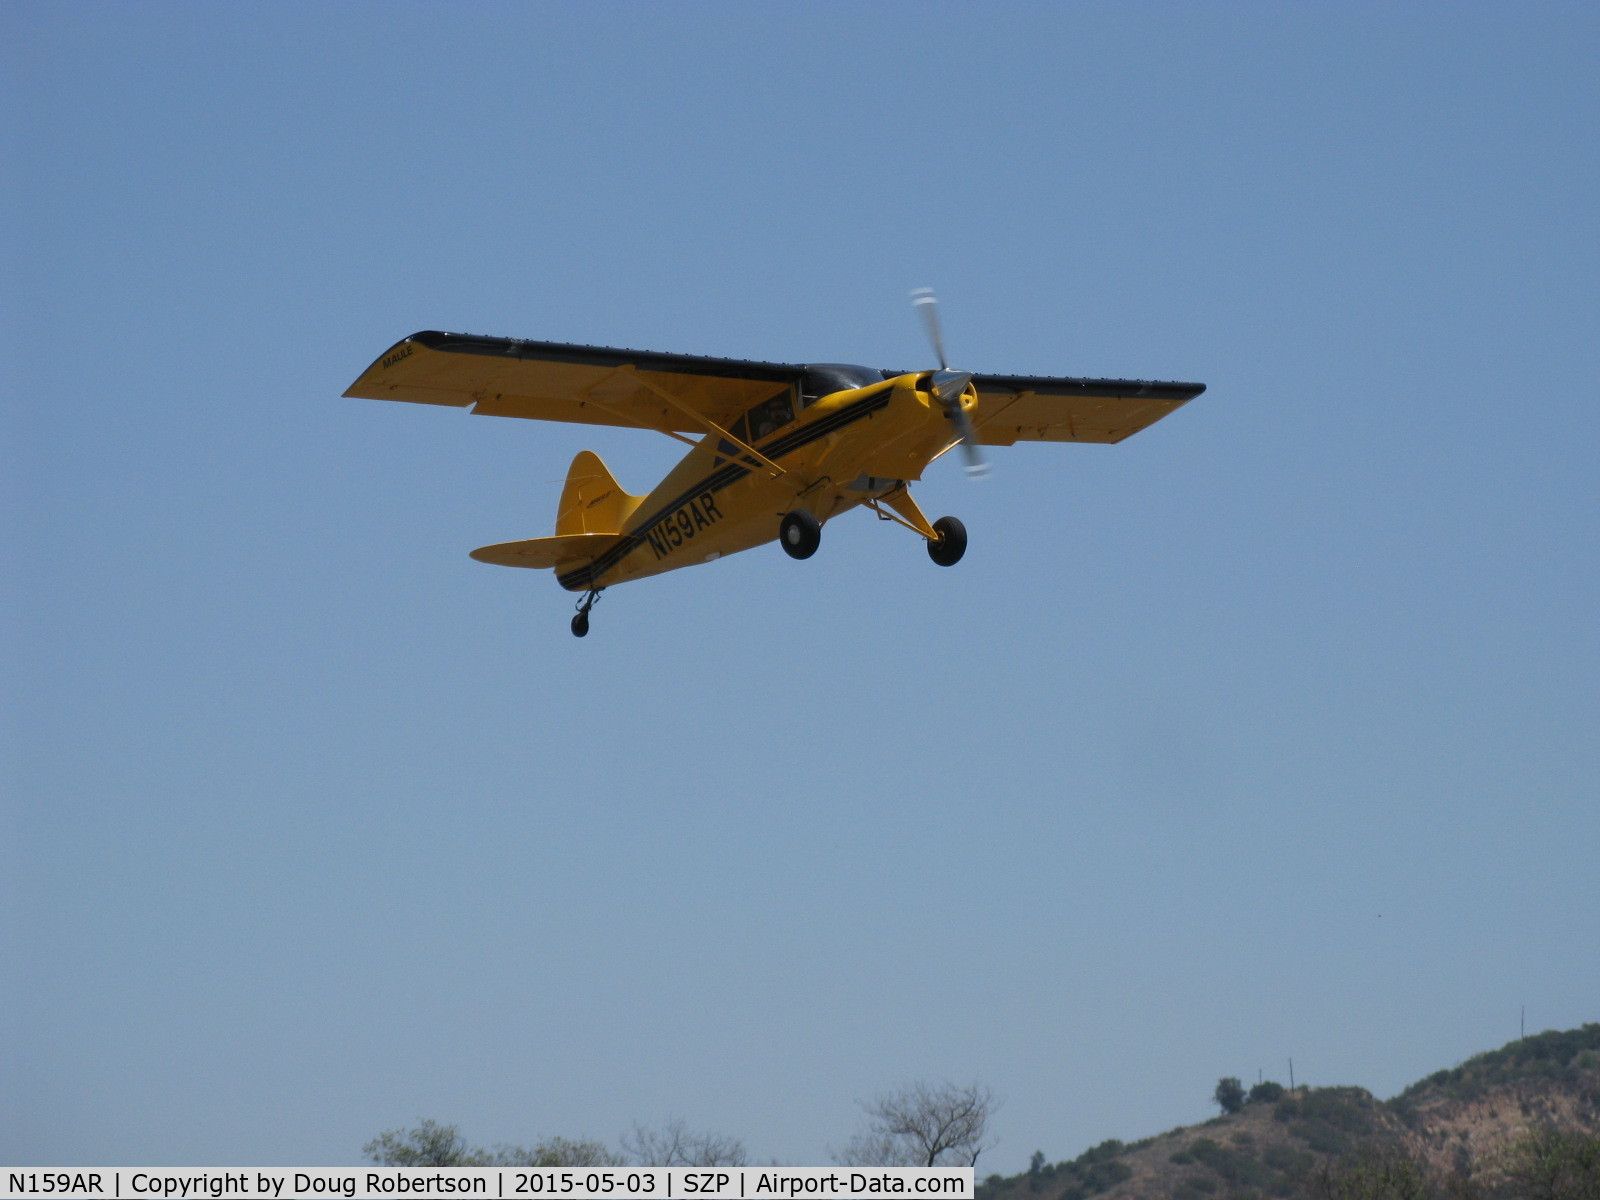 N159AR, 2007 Maule M-4-180V C/N 47013T, 2007 Maule M-4-180V, Lycoming O-360-C1F 180 Hp, Hartzell CS prop version, wing Micro vortex generators, takeoff climb Rwy 22